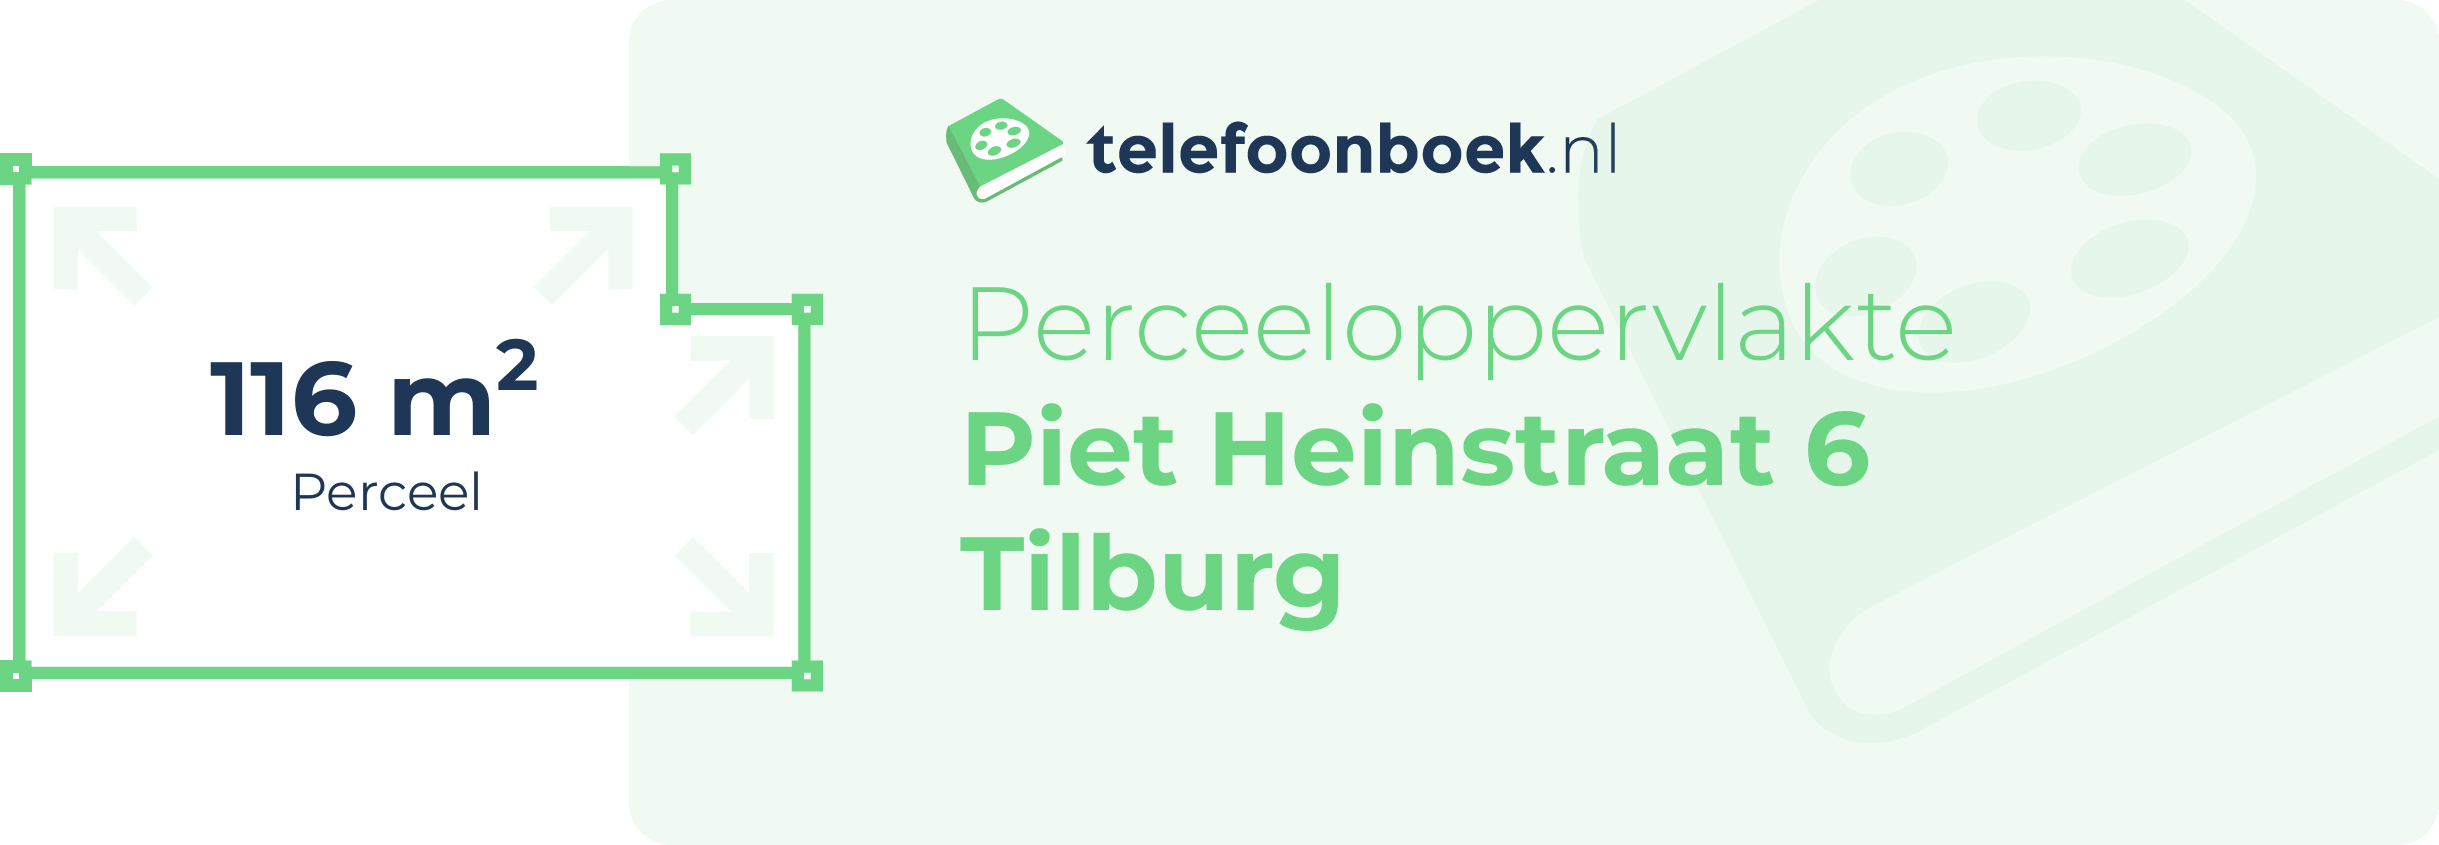 Perceeloppervlakte Piet Heinstraat 6 Tilburg